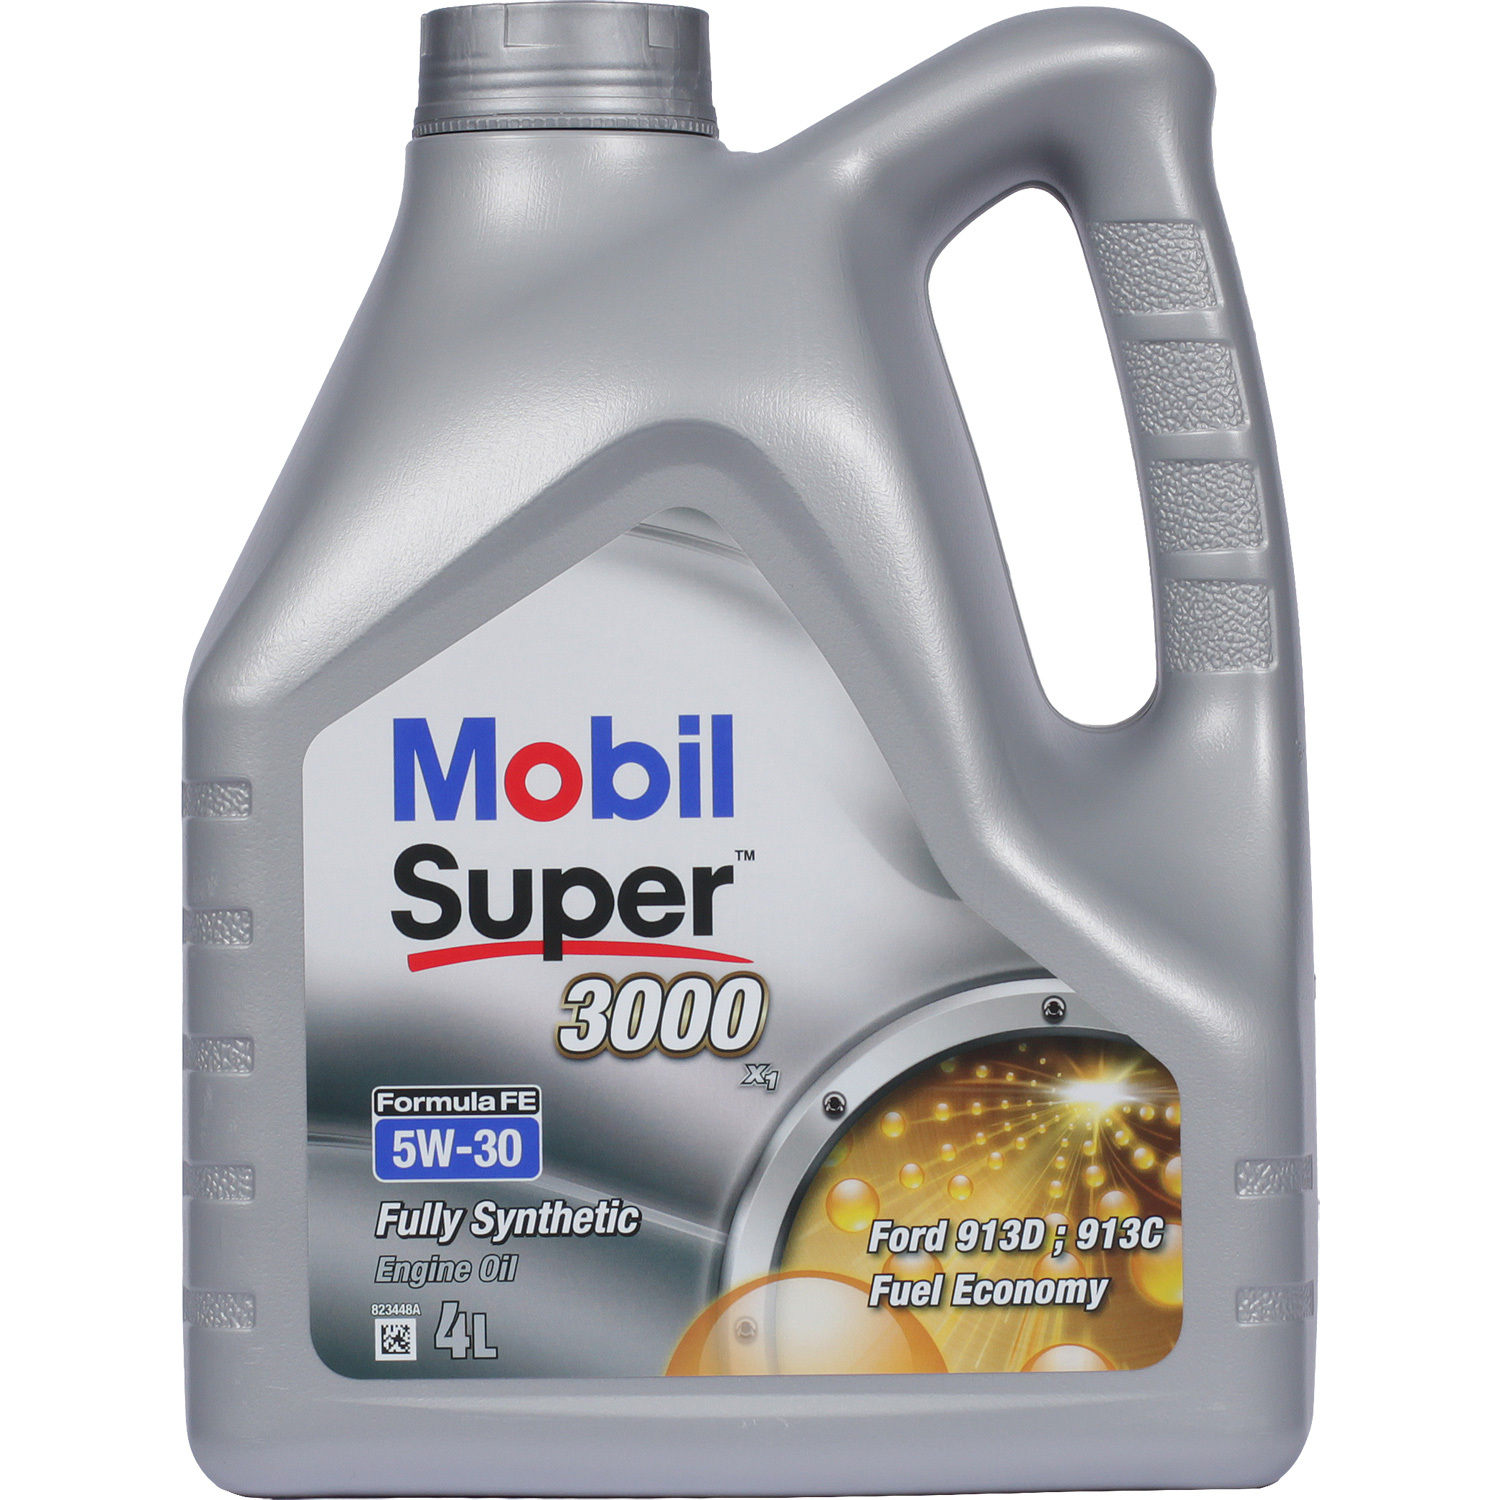 Mobil Моторное масло Mobil Super 3000 X1 Formula FE 5W-30, 4 л масло моторное mobil super 3000 x1 5w 40 1 л синтетика